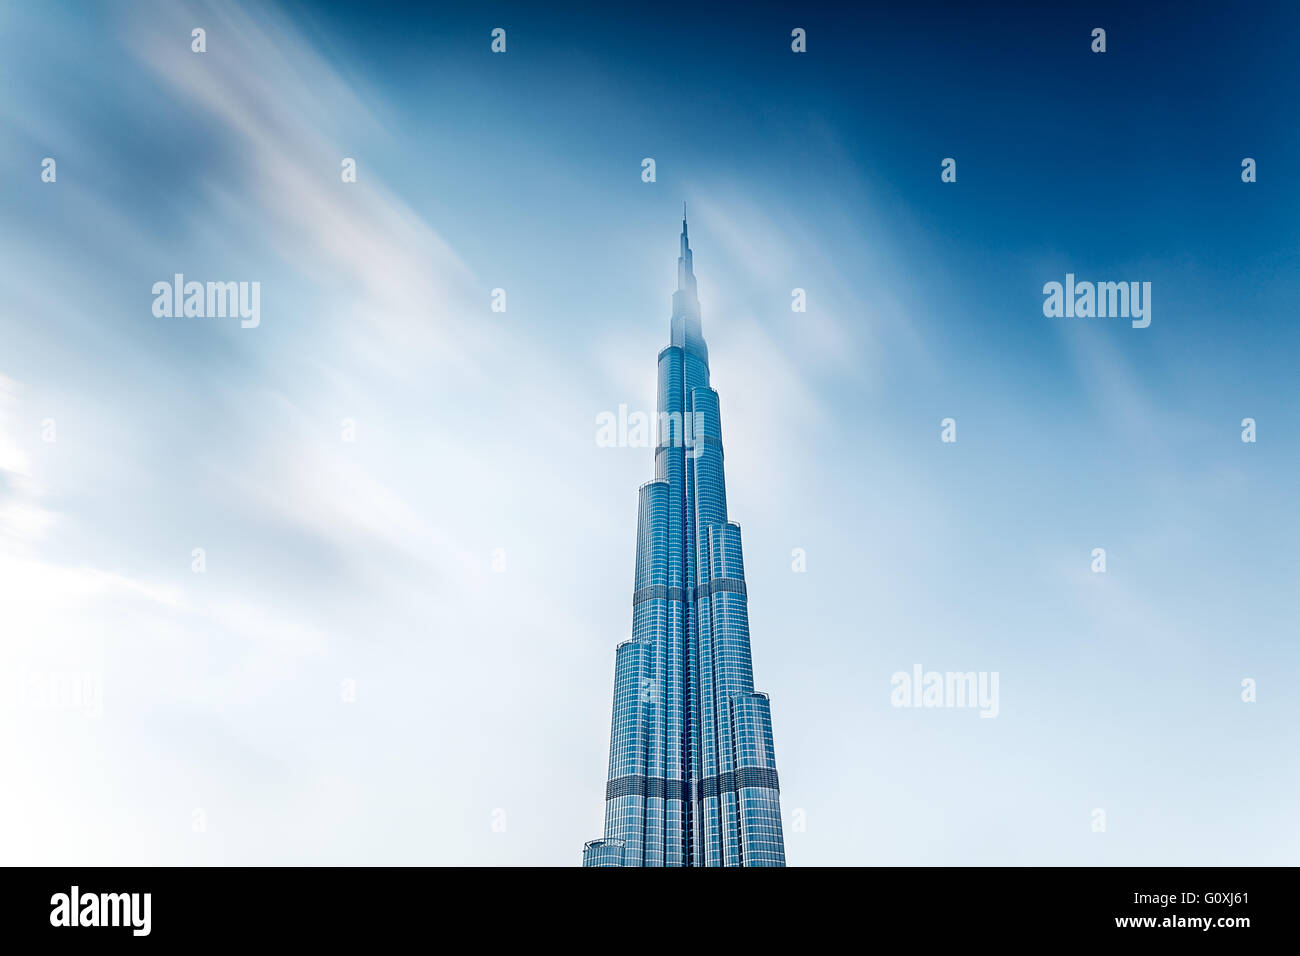 DUBAI, UAE - FEBRUARY 17: Burj Khalifa - world's tallest tower at 828m, located in Downtown Dubai, Burj Dubai Stock Photo